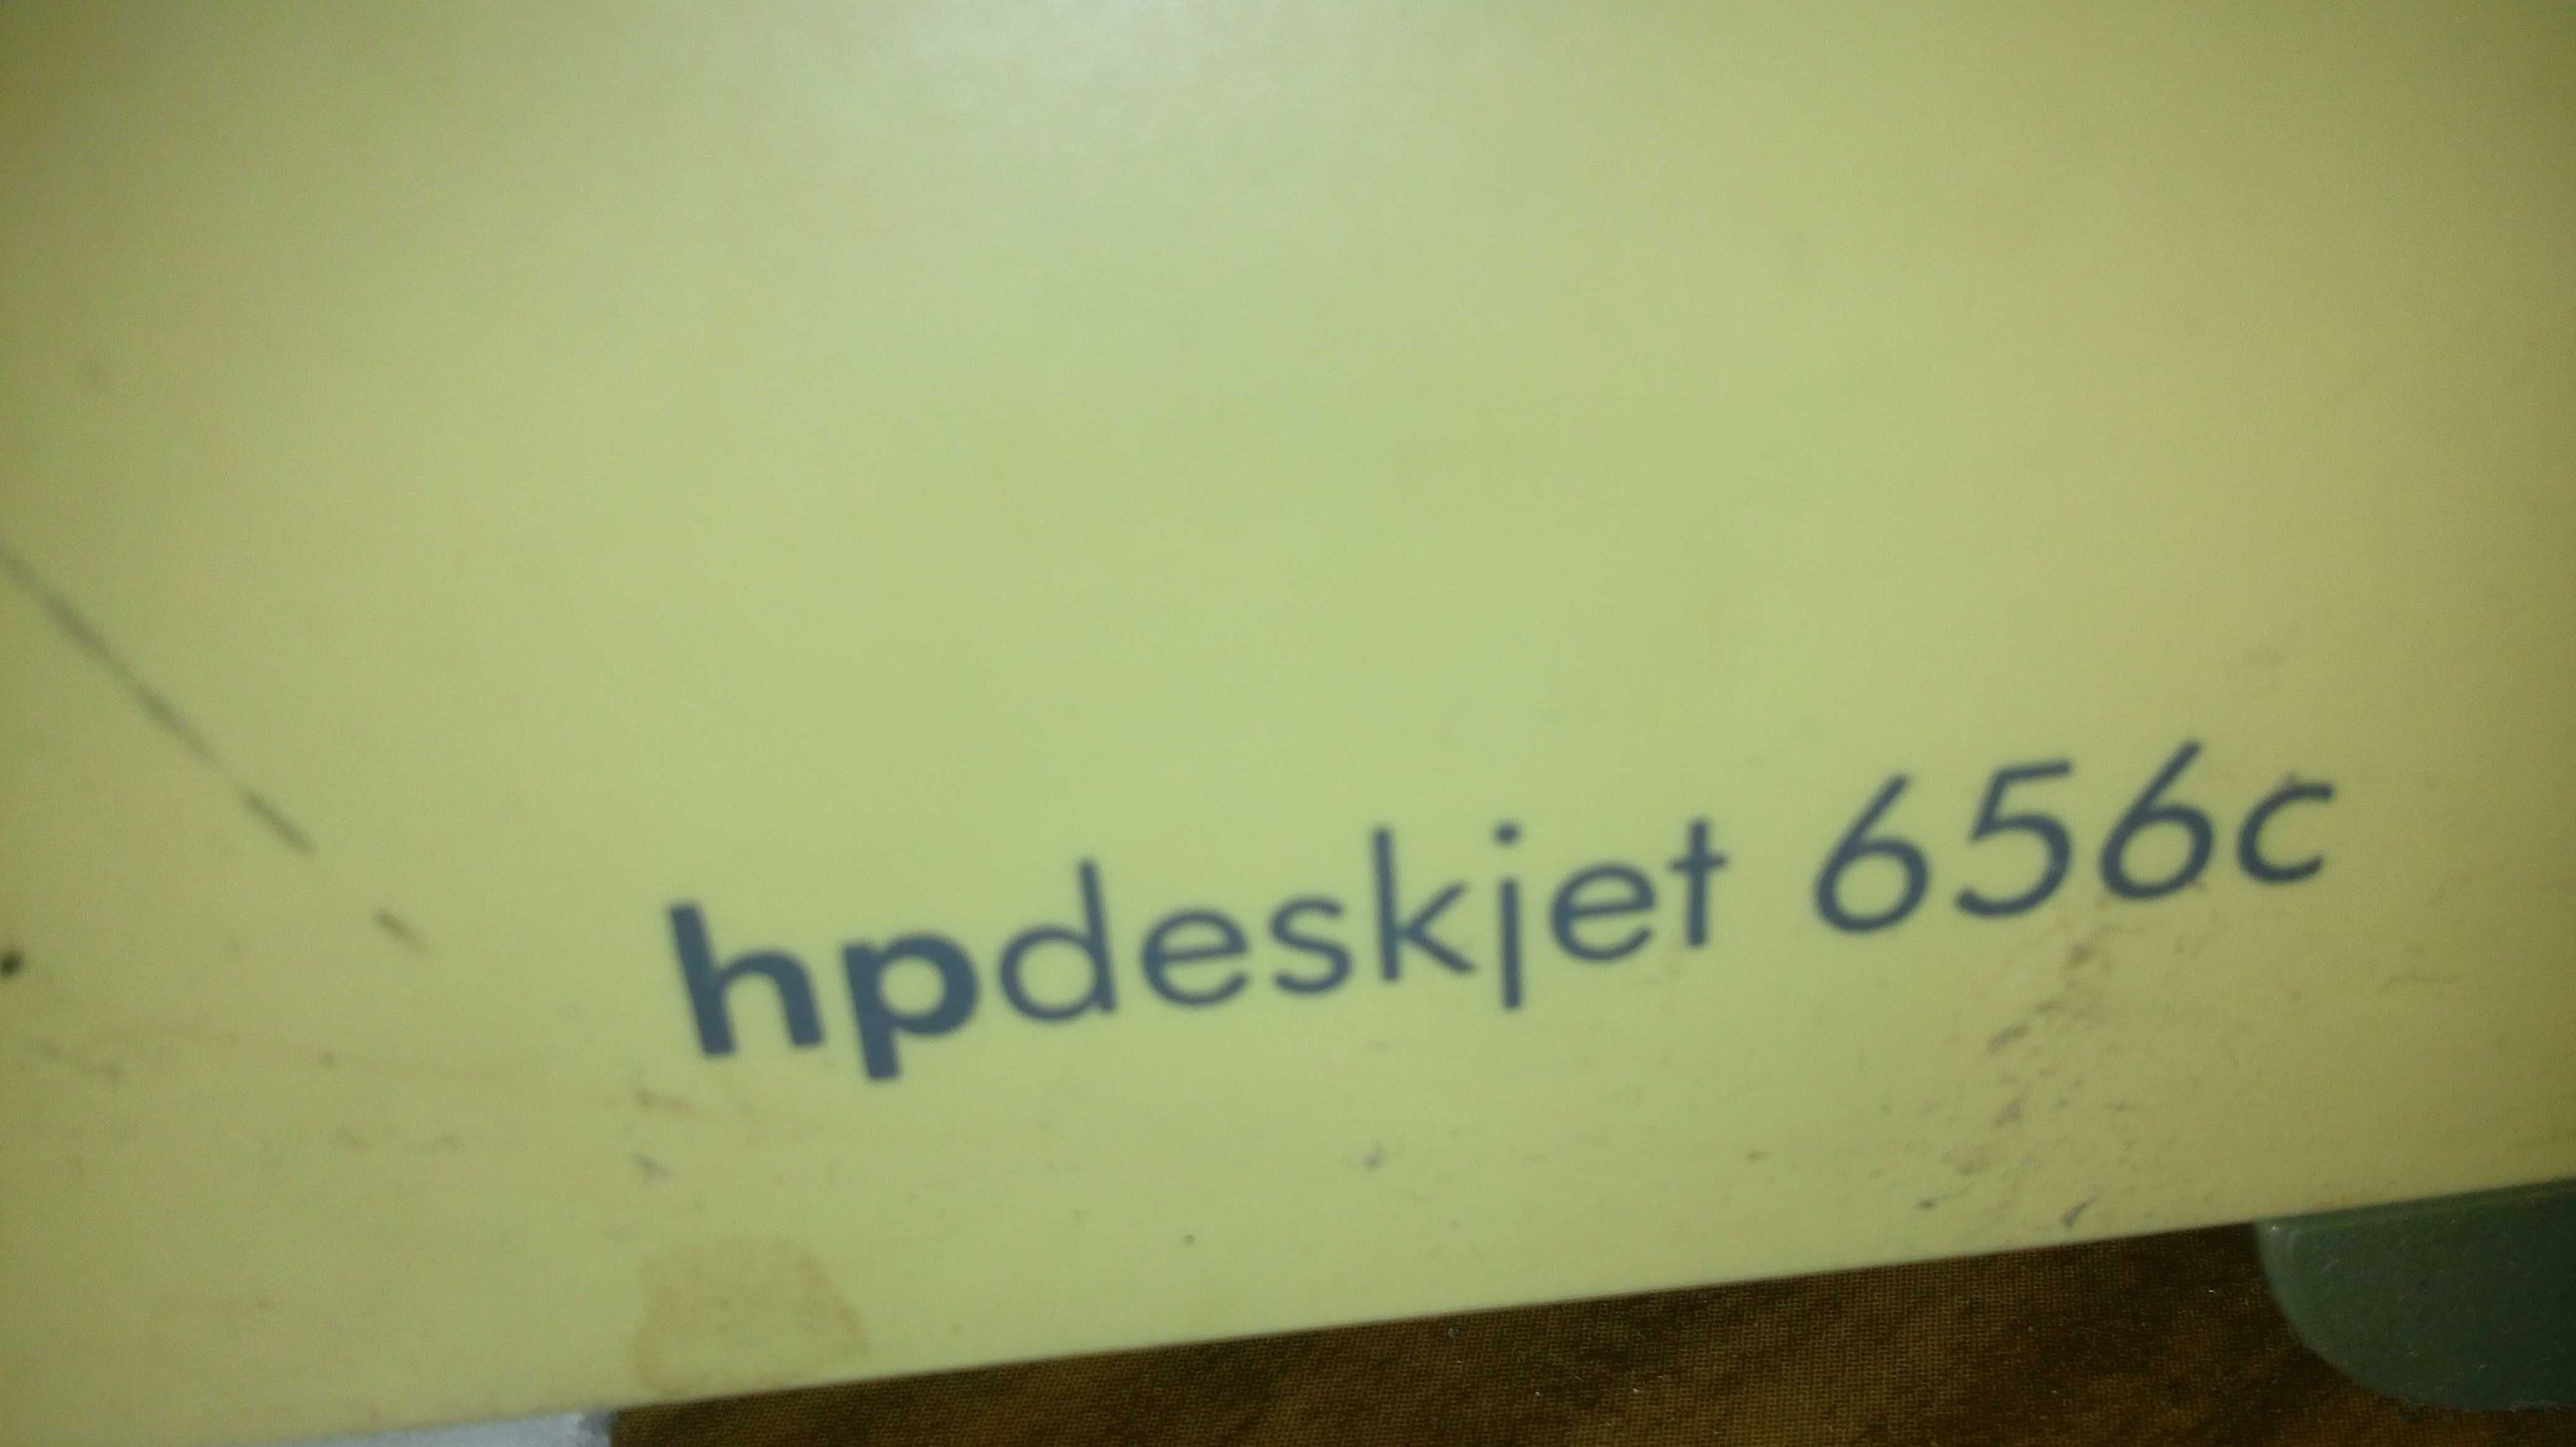 Принтер HP Deskjet 656c hpDJ